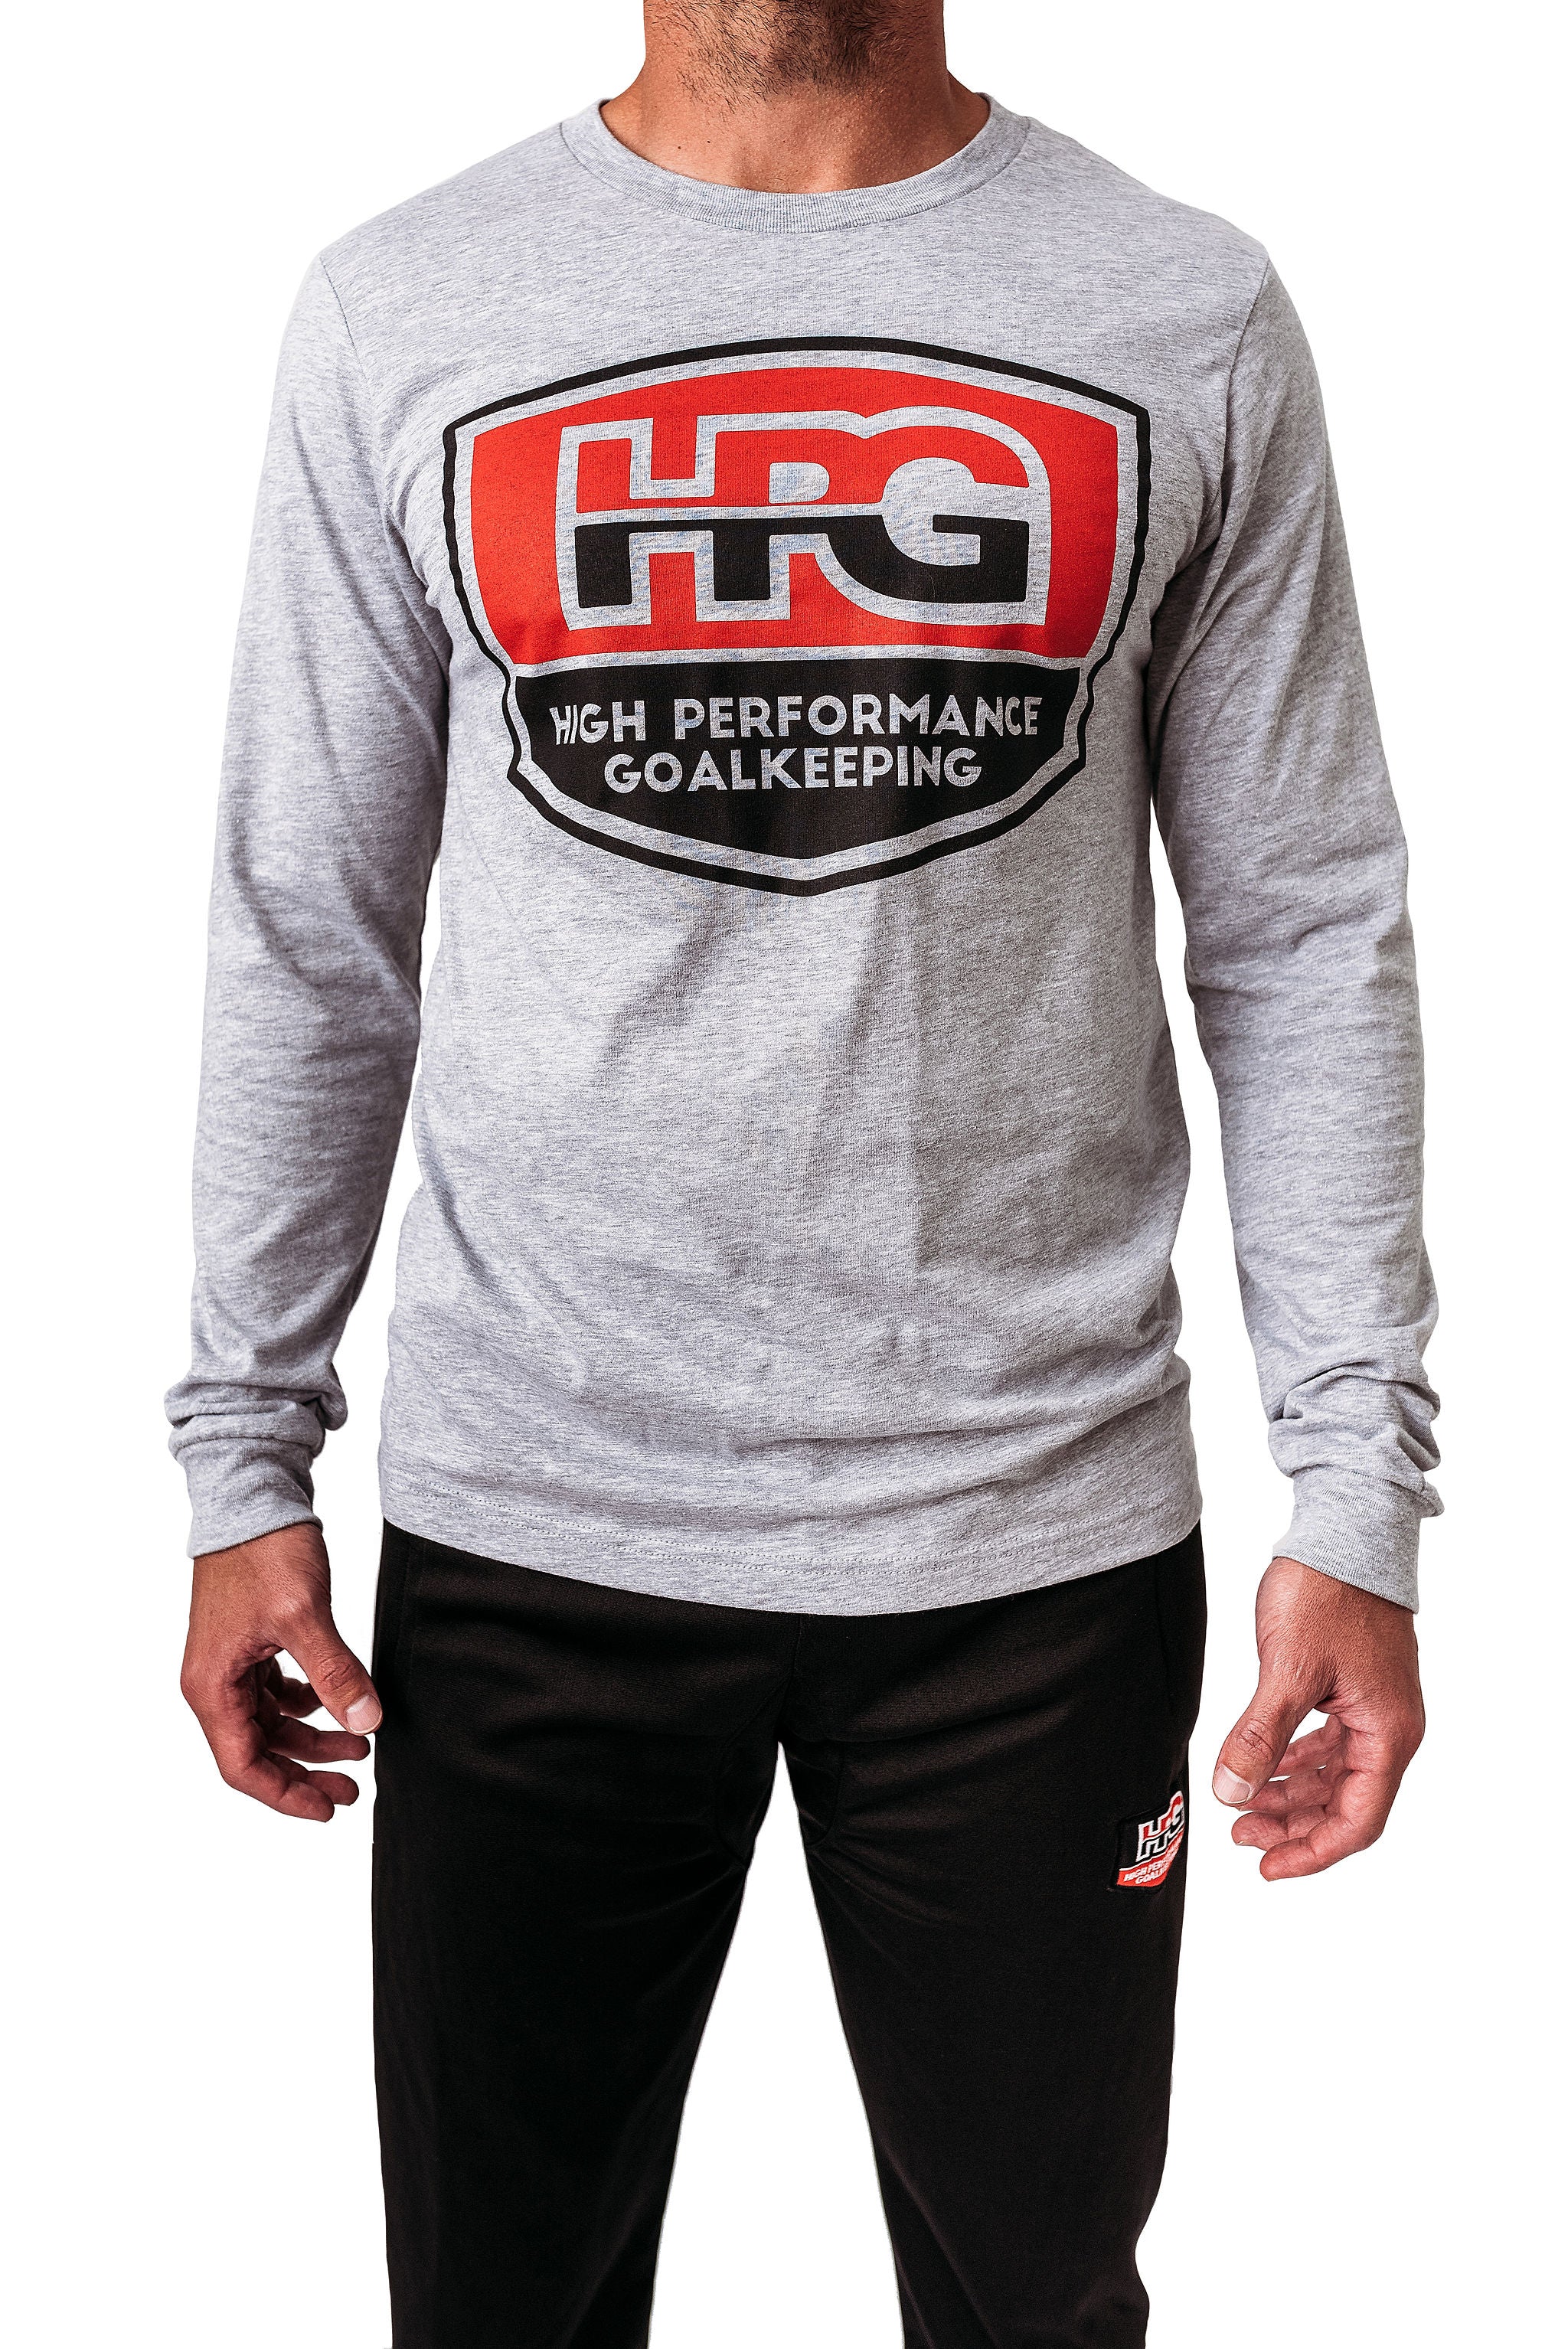 HPG T-shirt hpgoalkeeping.com